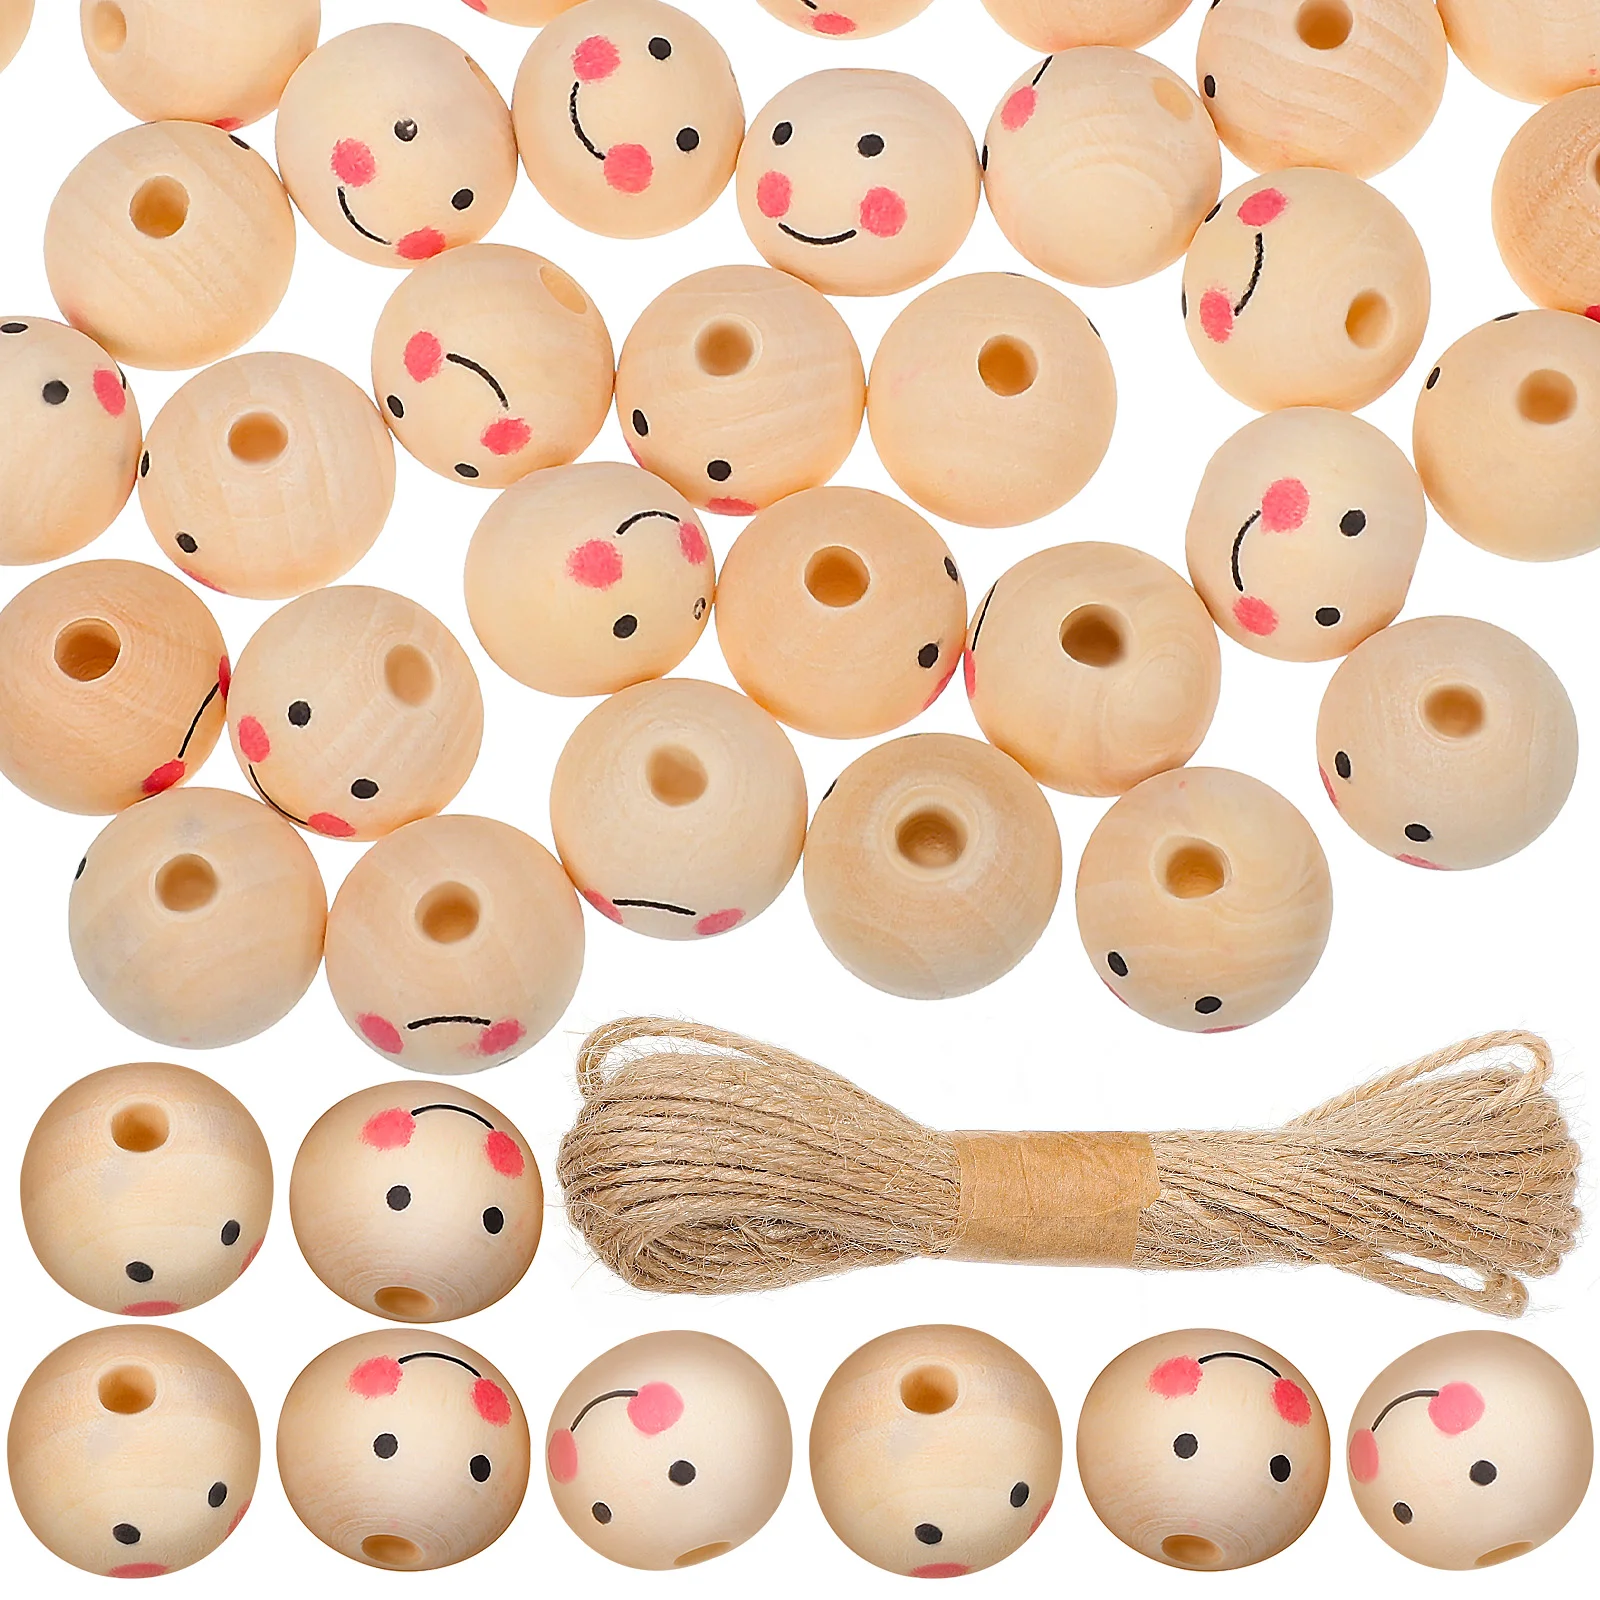 

50 Pcs Decor Wood Rounds Crafts Beads Bulk Decorate Holes Decorative Wooden Loose Child Jewelry Making